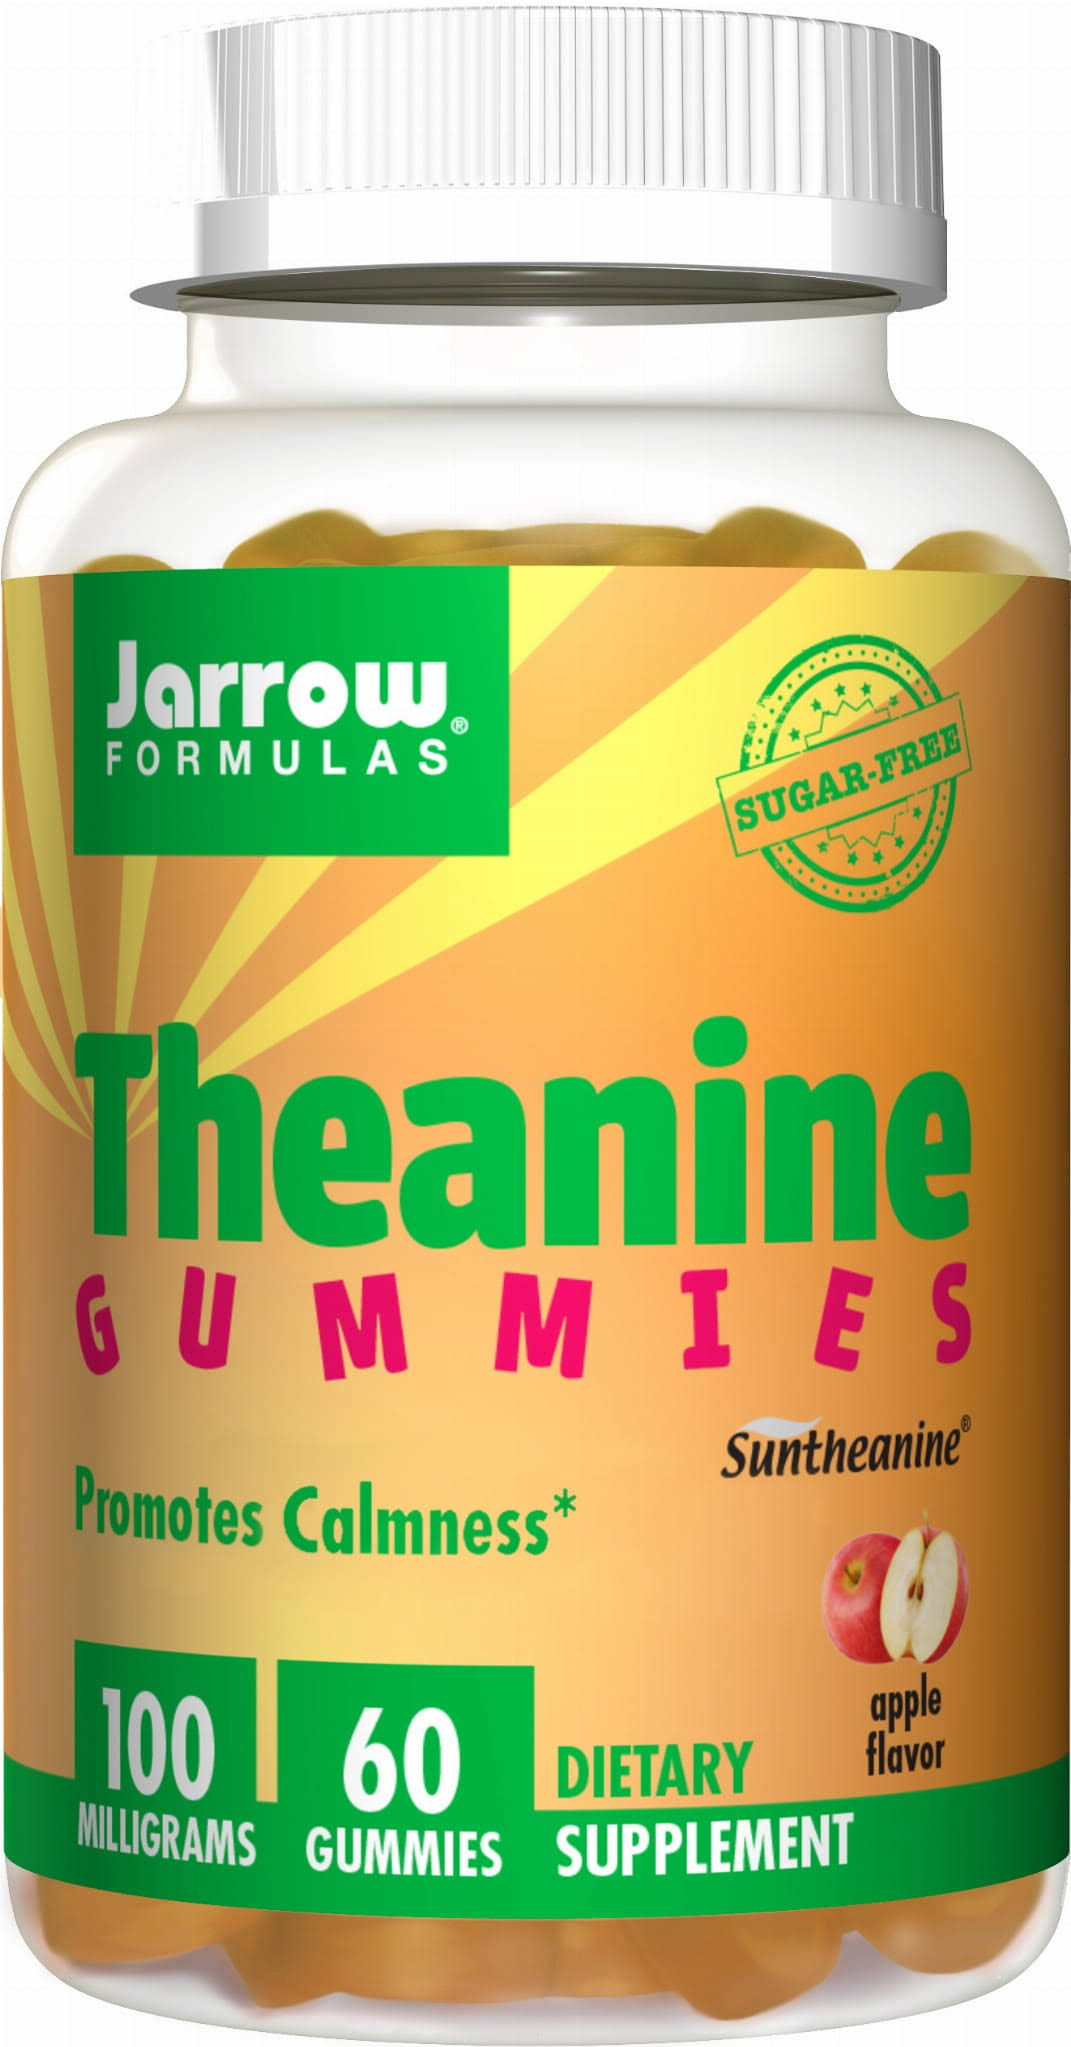 Jarrow Formulas Theanine Gummie Dietary Supplement - 100mg, 60ct